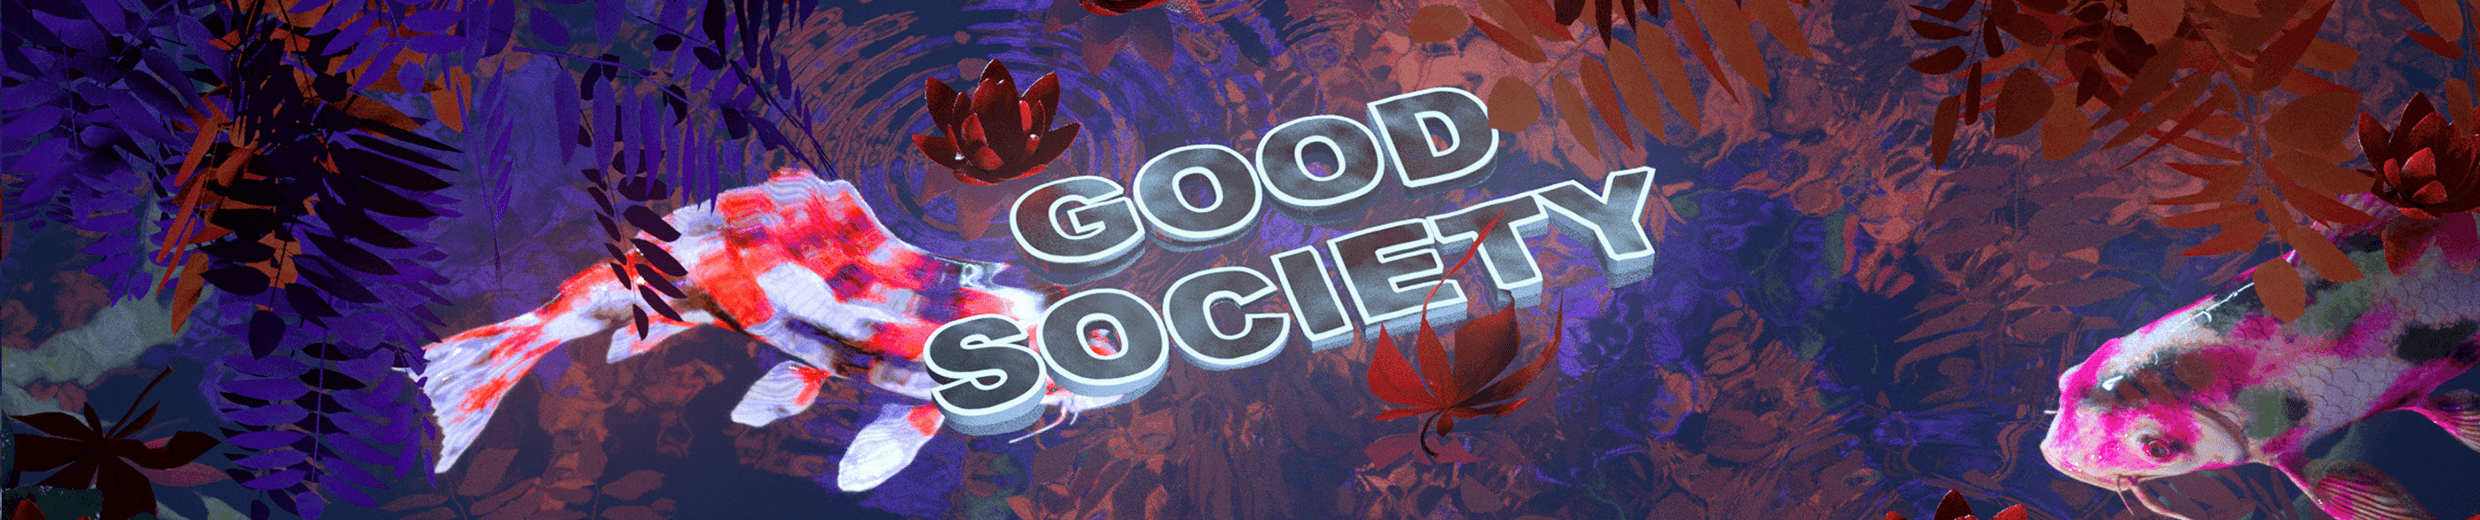 GoodSociety banner